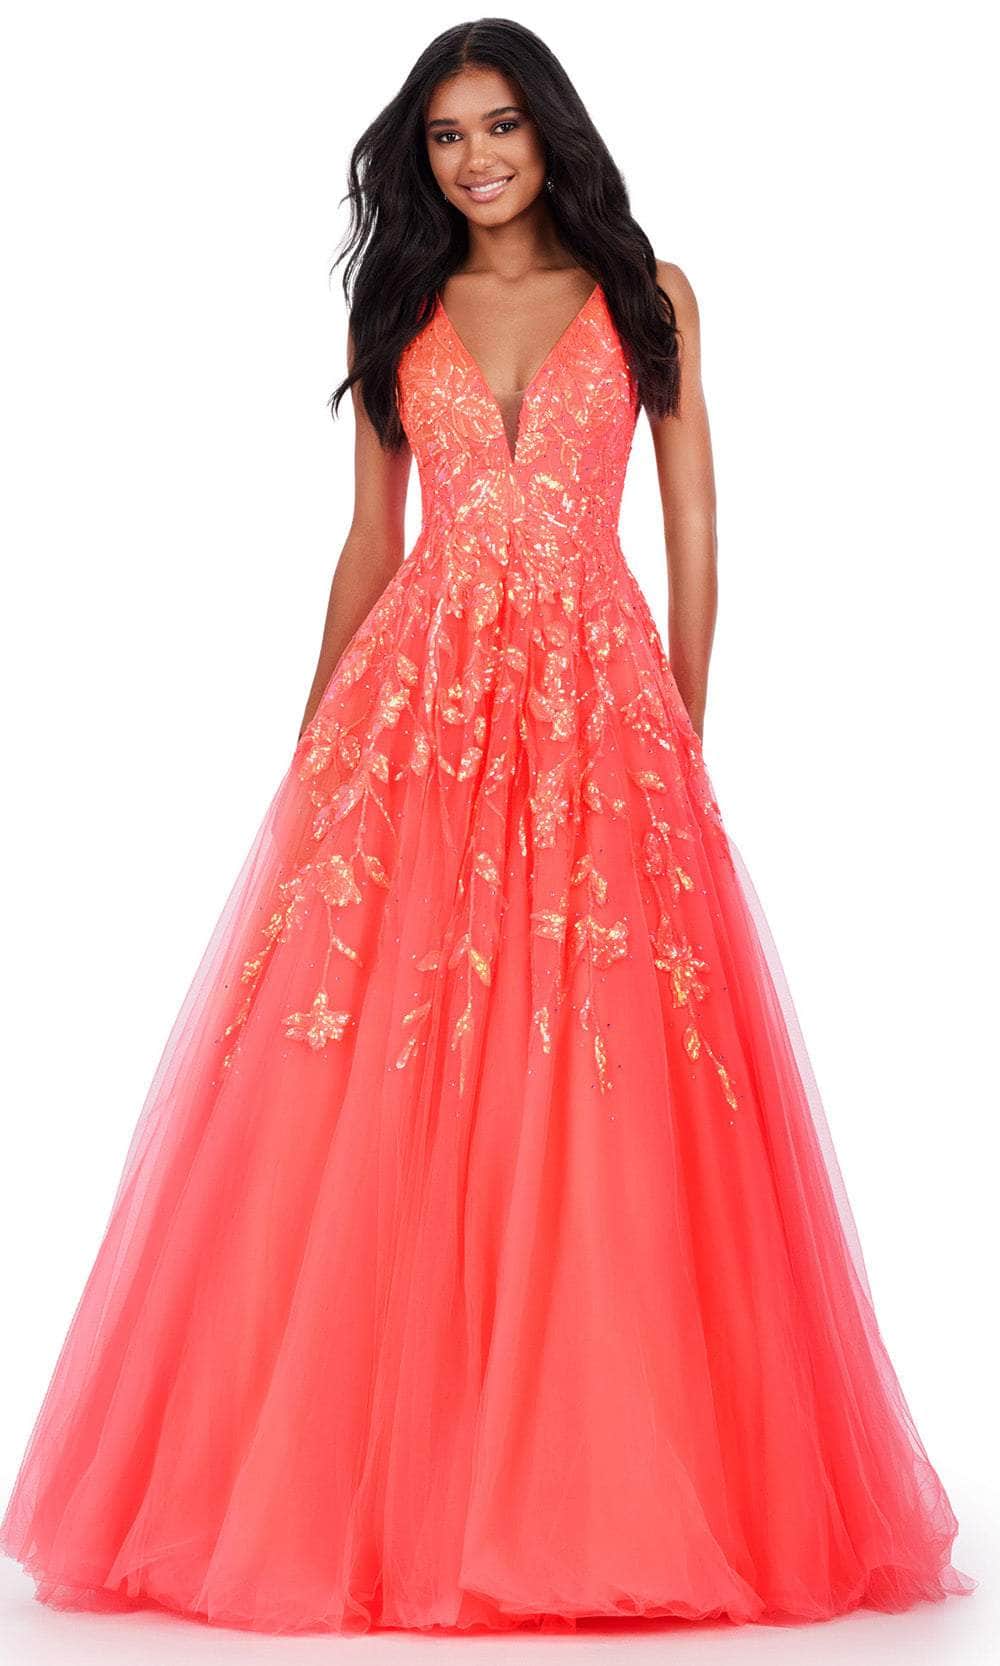 Image of Ashley Lauren 11470 - Sequin V-Neck Prom Dress